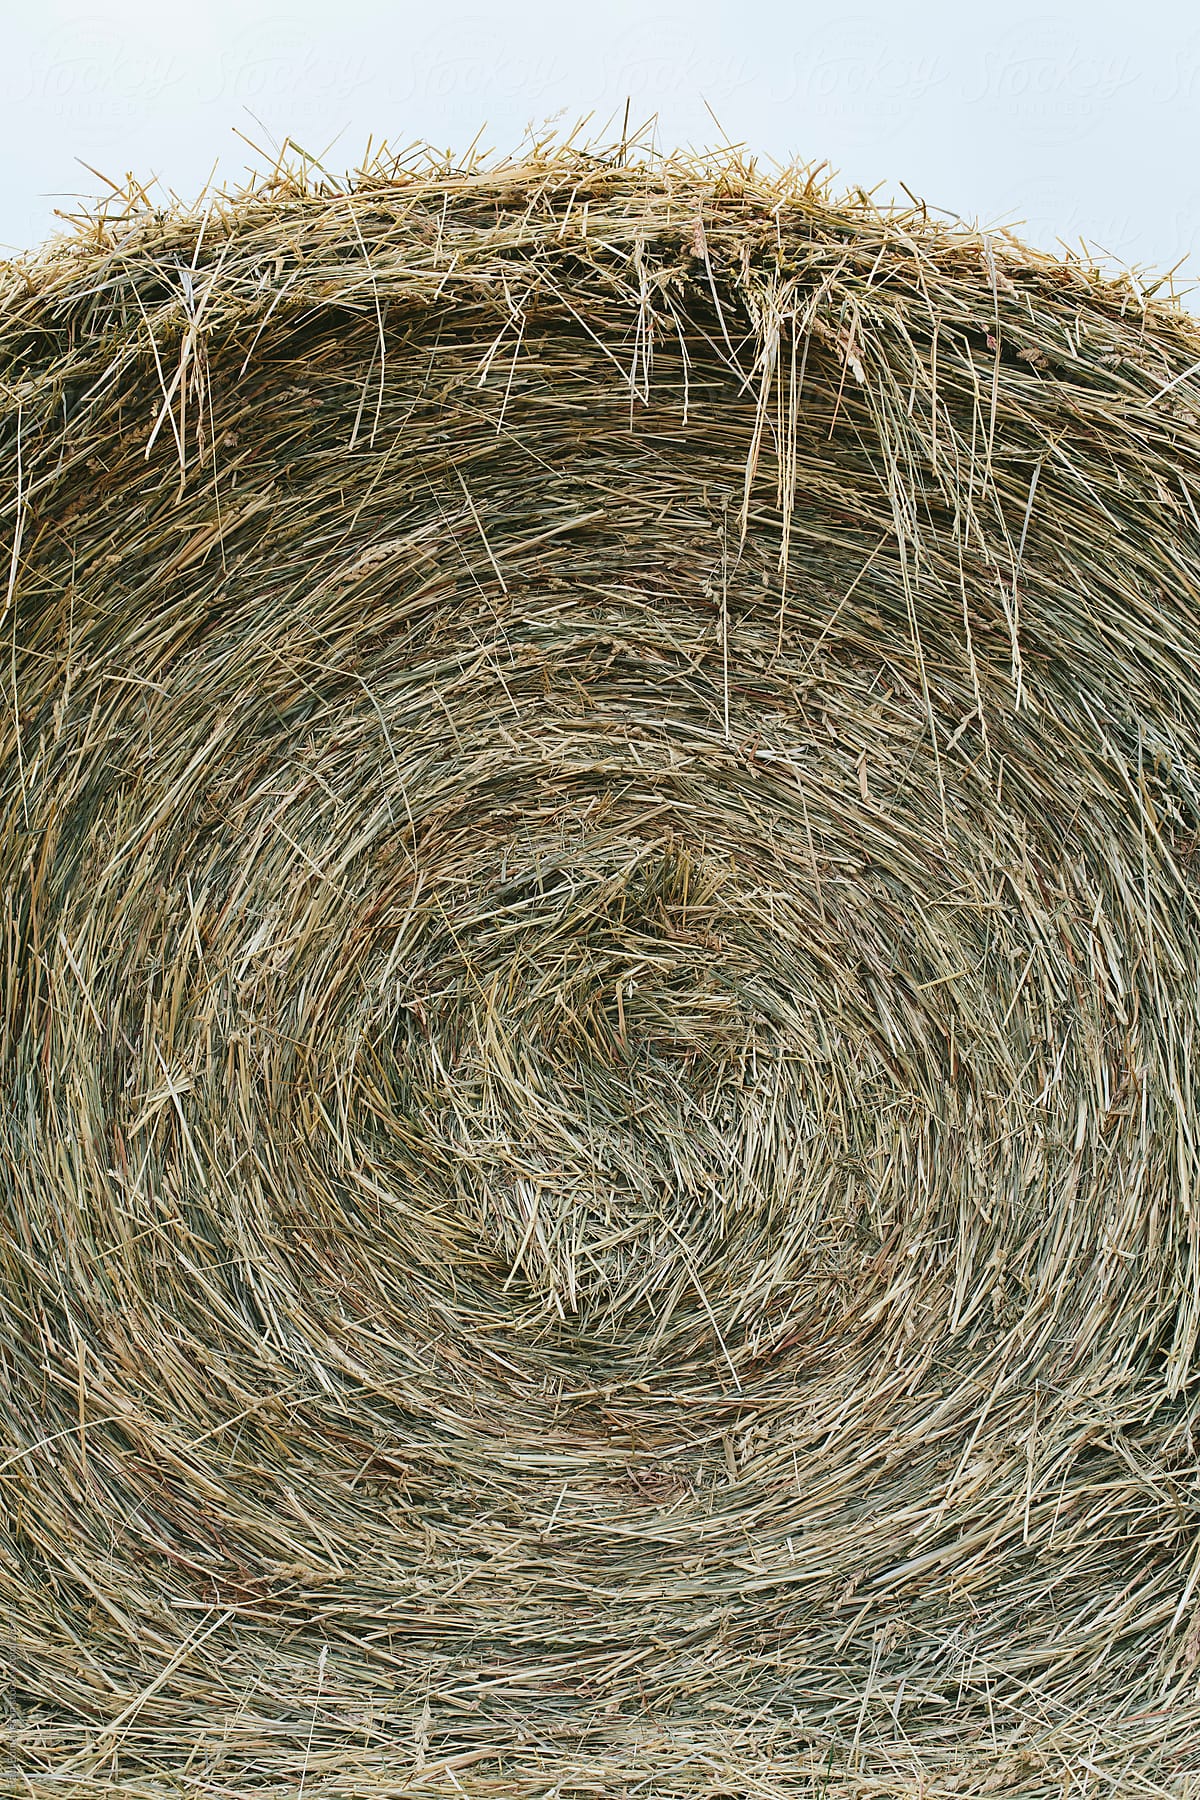 Bales of hay